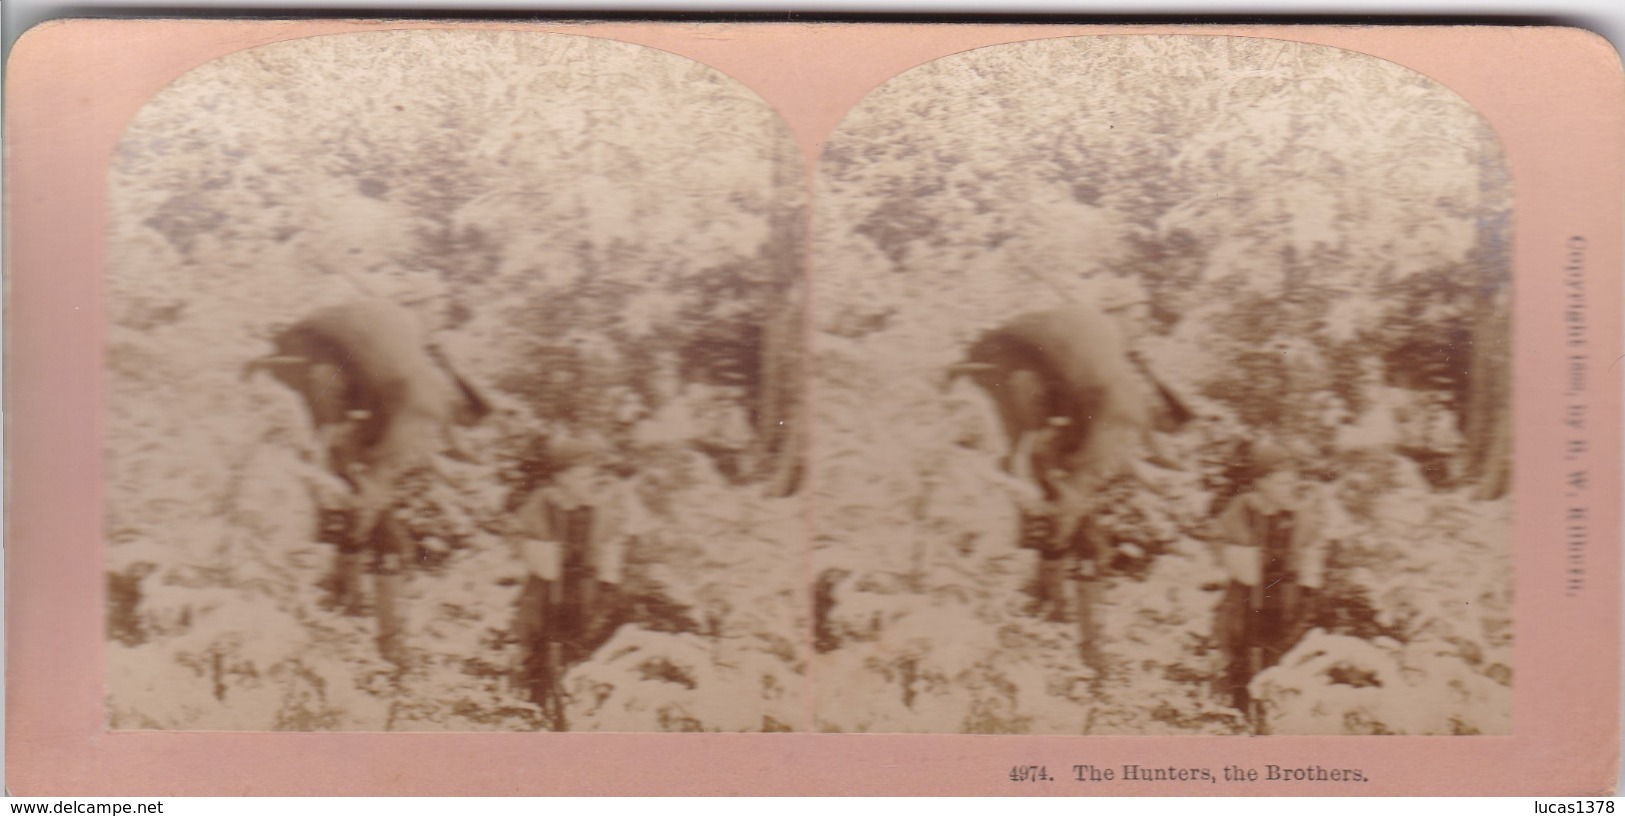 1894 / KILBURN 4974 / CHASSE / HUNTING / THE HUNTERS / BROTHERS - Photos Stéréoscopiques